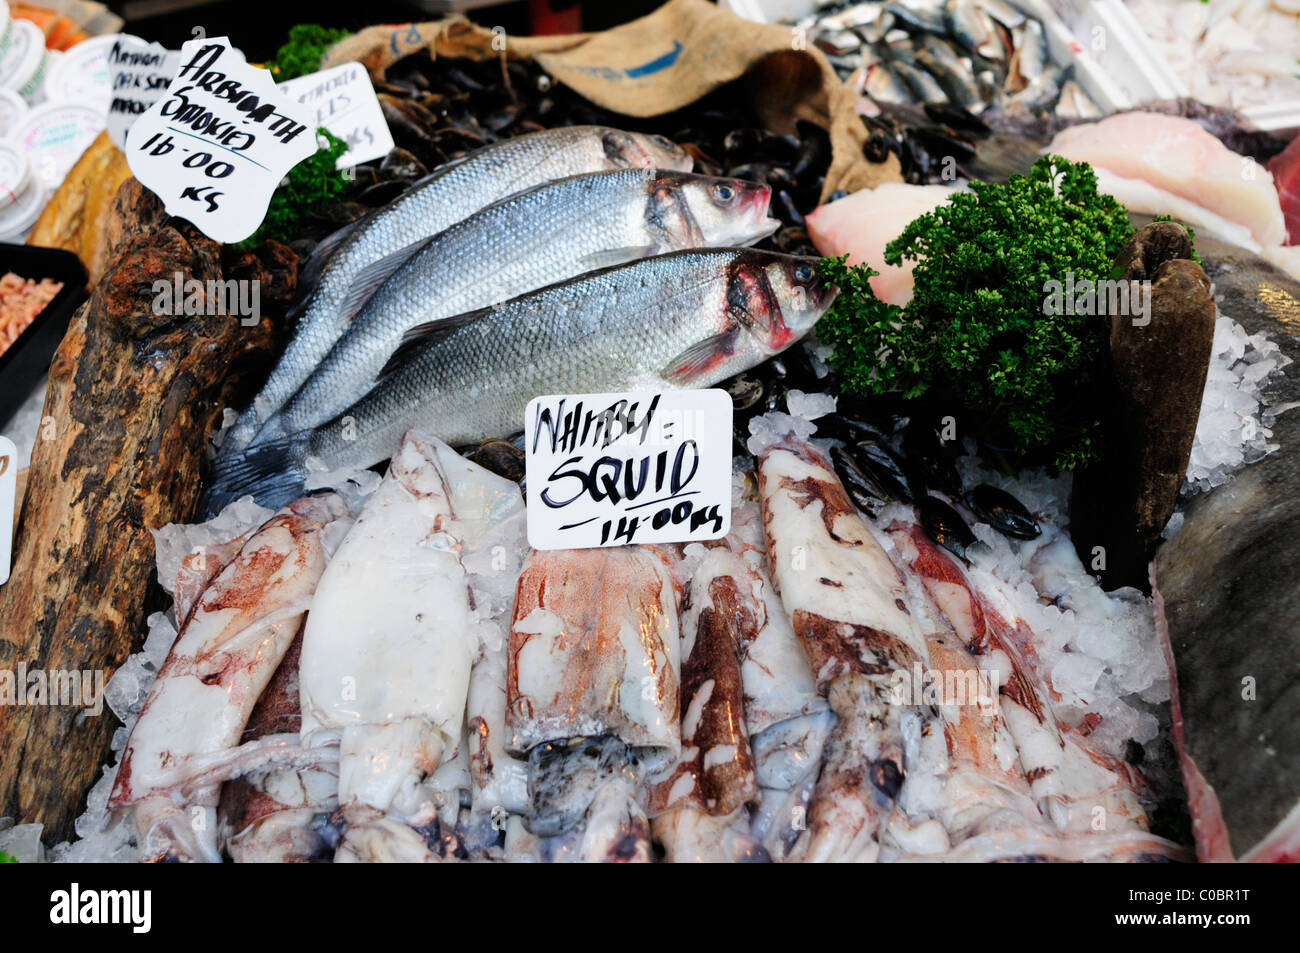 Fishmonger's Stall with Whitby Squid, Borough Market, Southwark, London, England, Uk Stock Photo